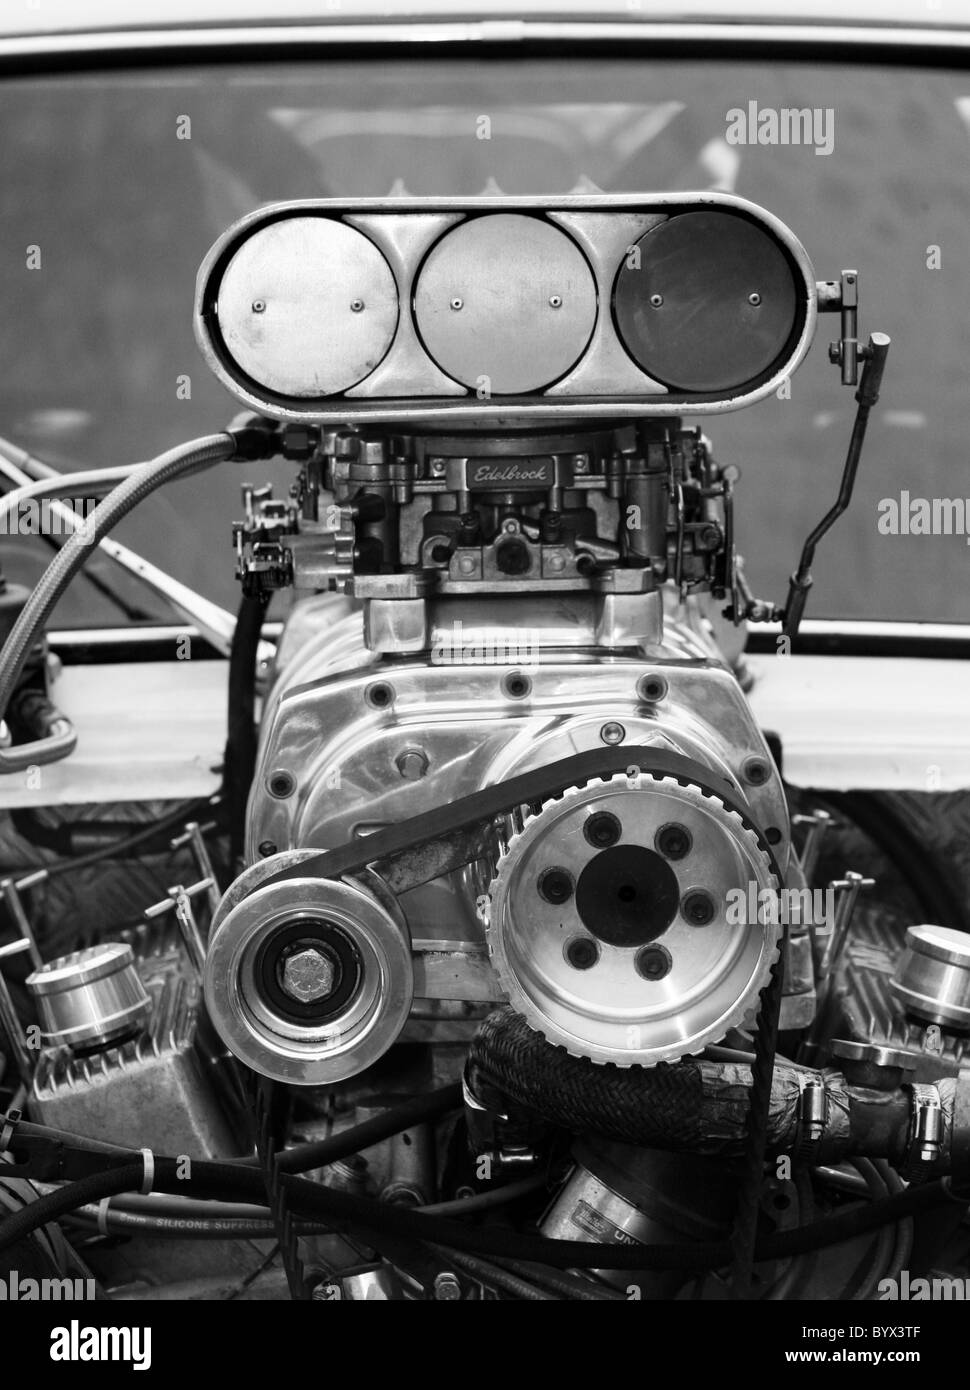 Blown engine Stock Photo